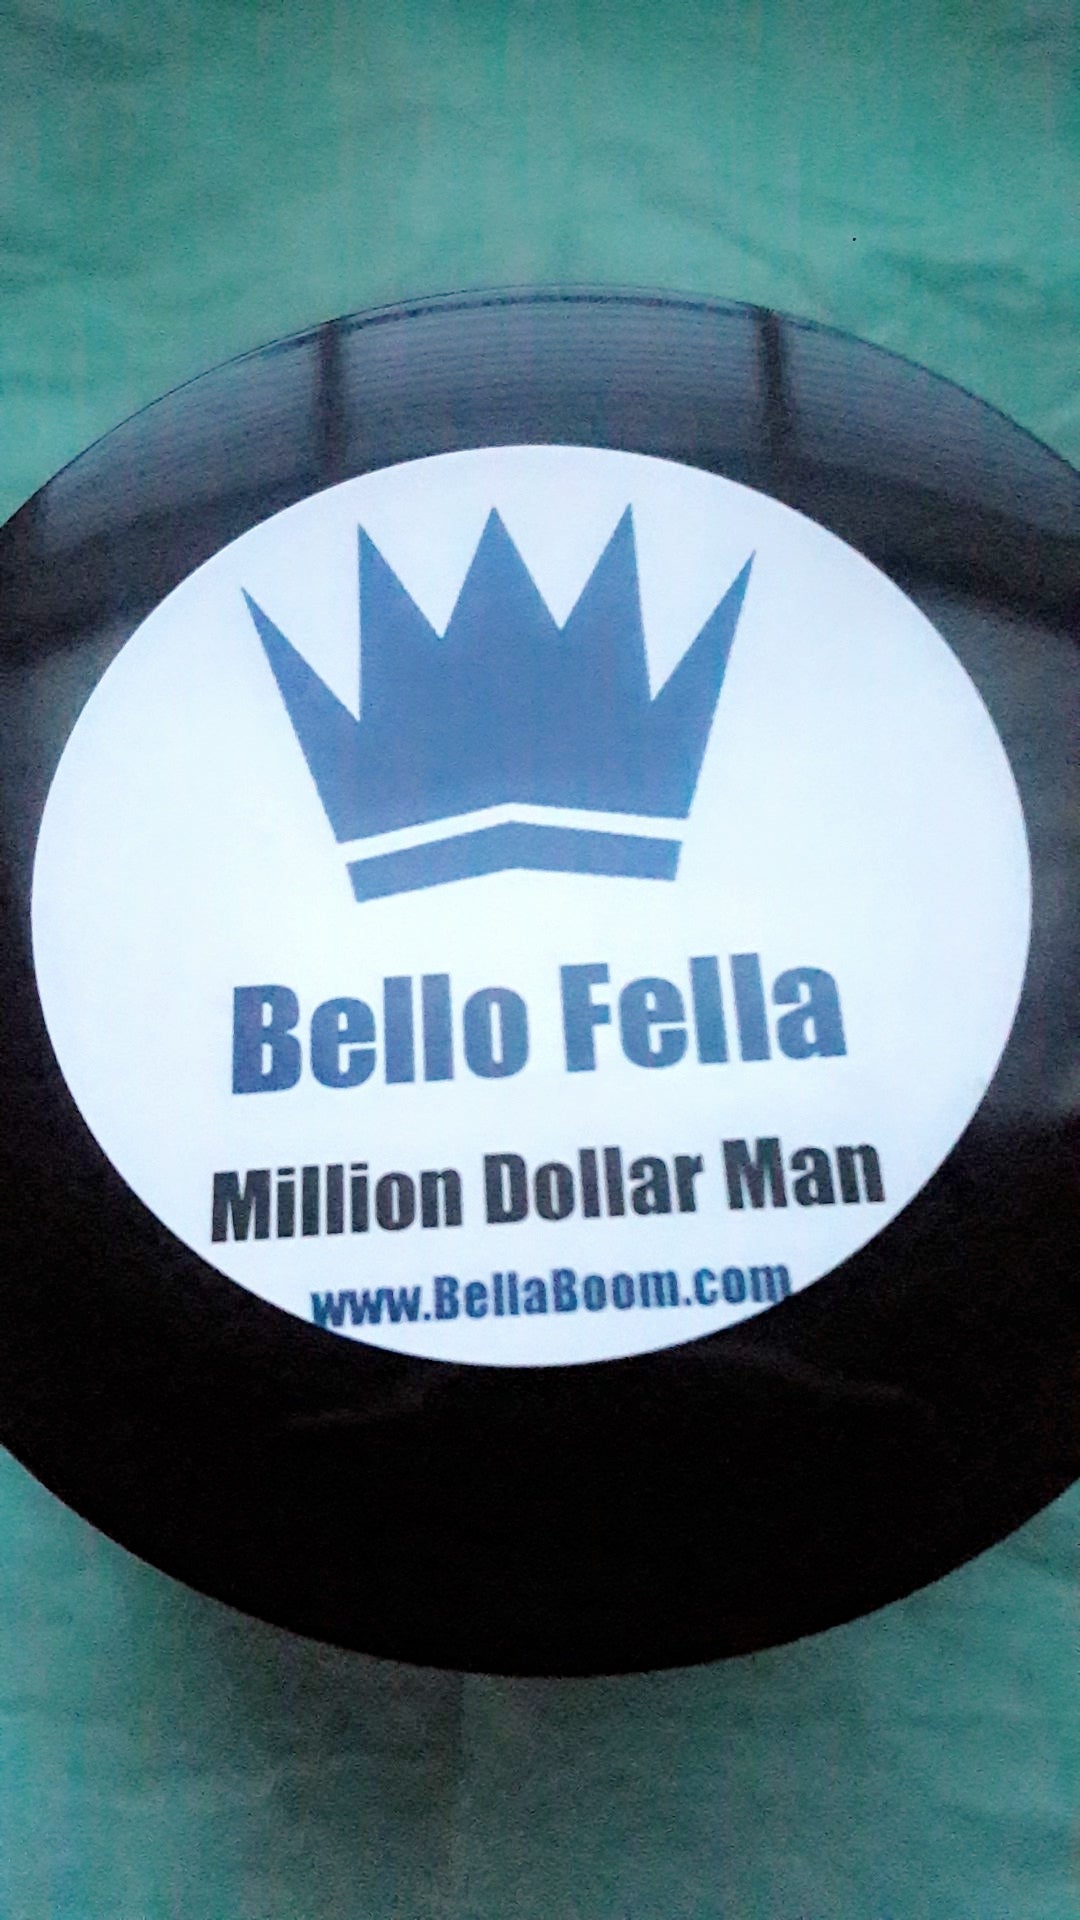 Bello Fella "Million Dollar Man"